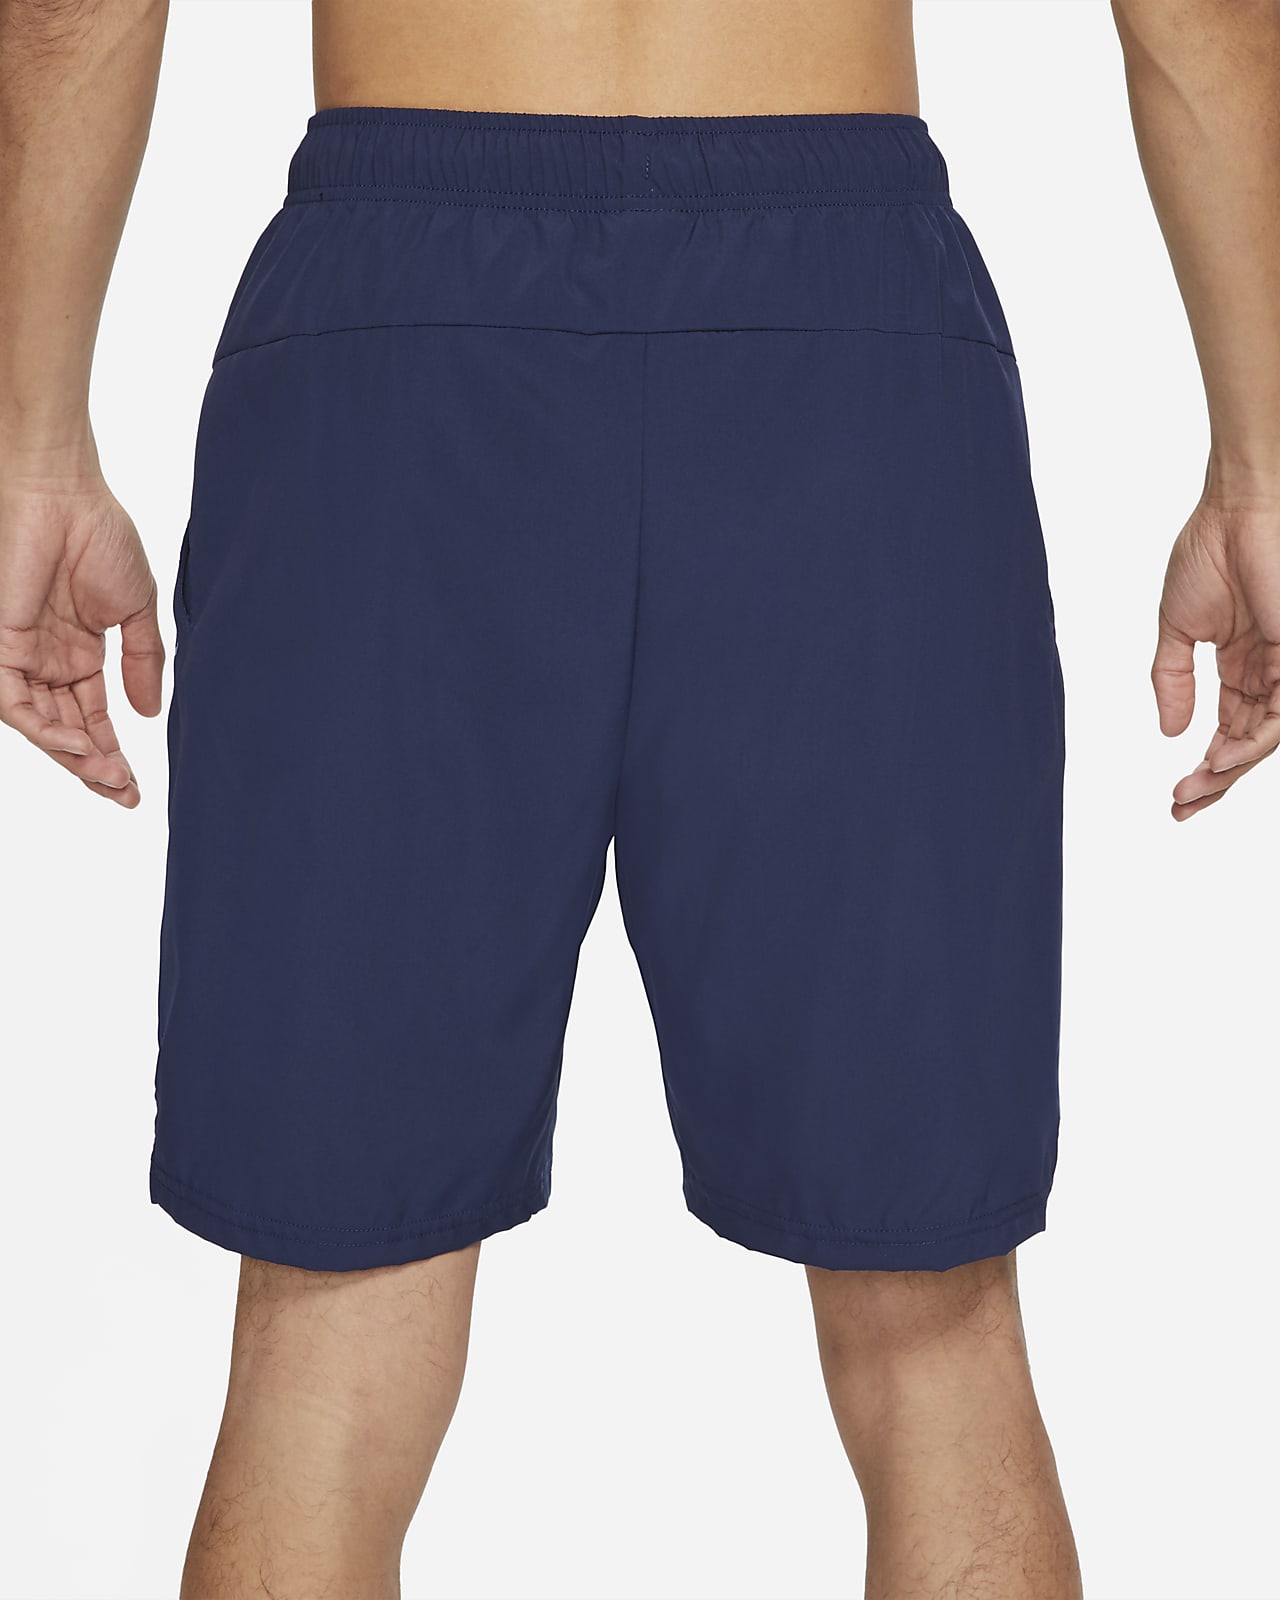 nike flex men's 8 inch training shorts